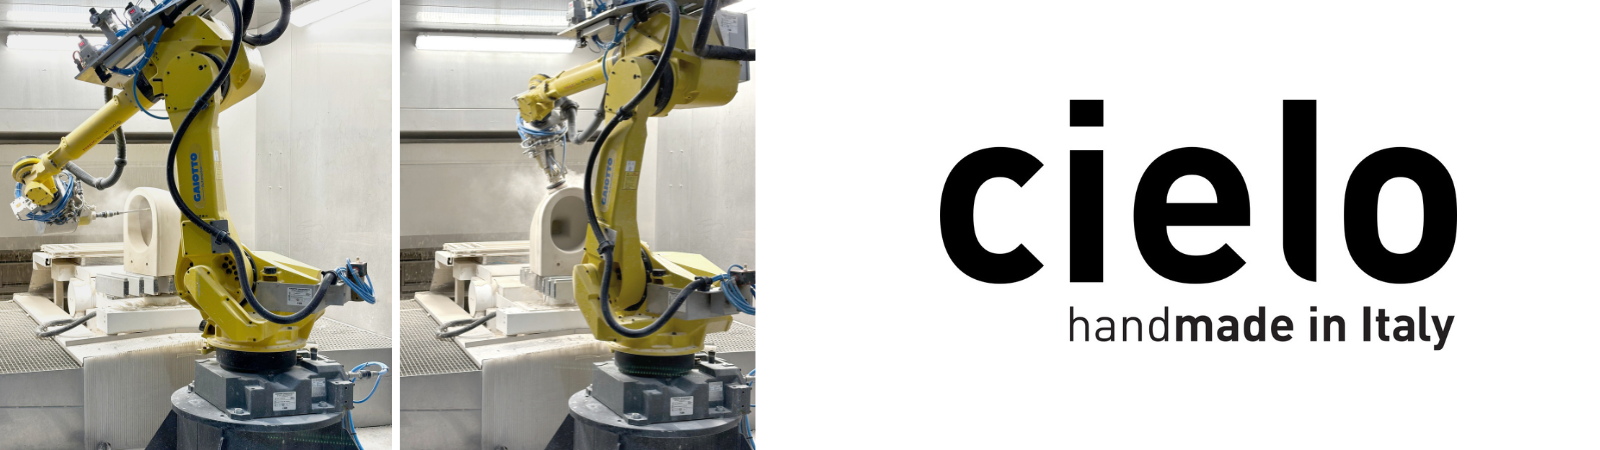 Ceramica Cielo buys second SACMI robotized finishing system